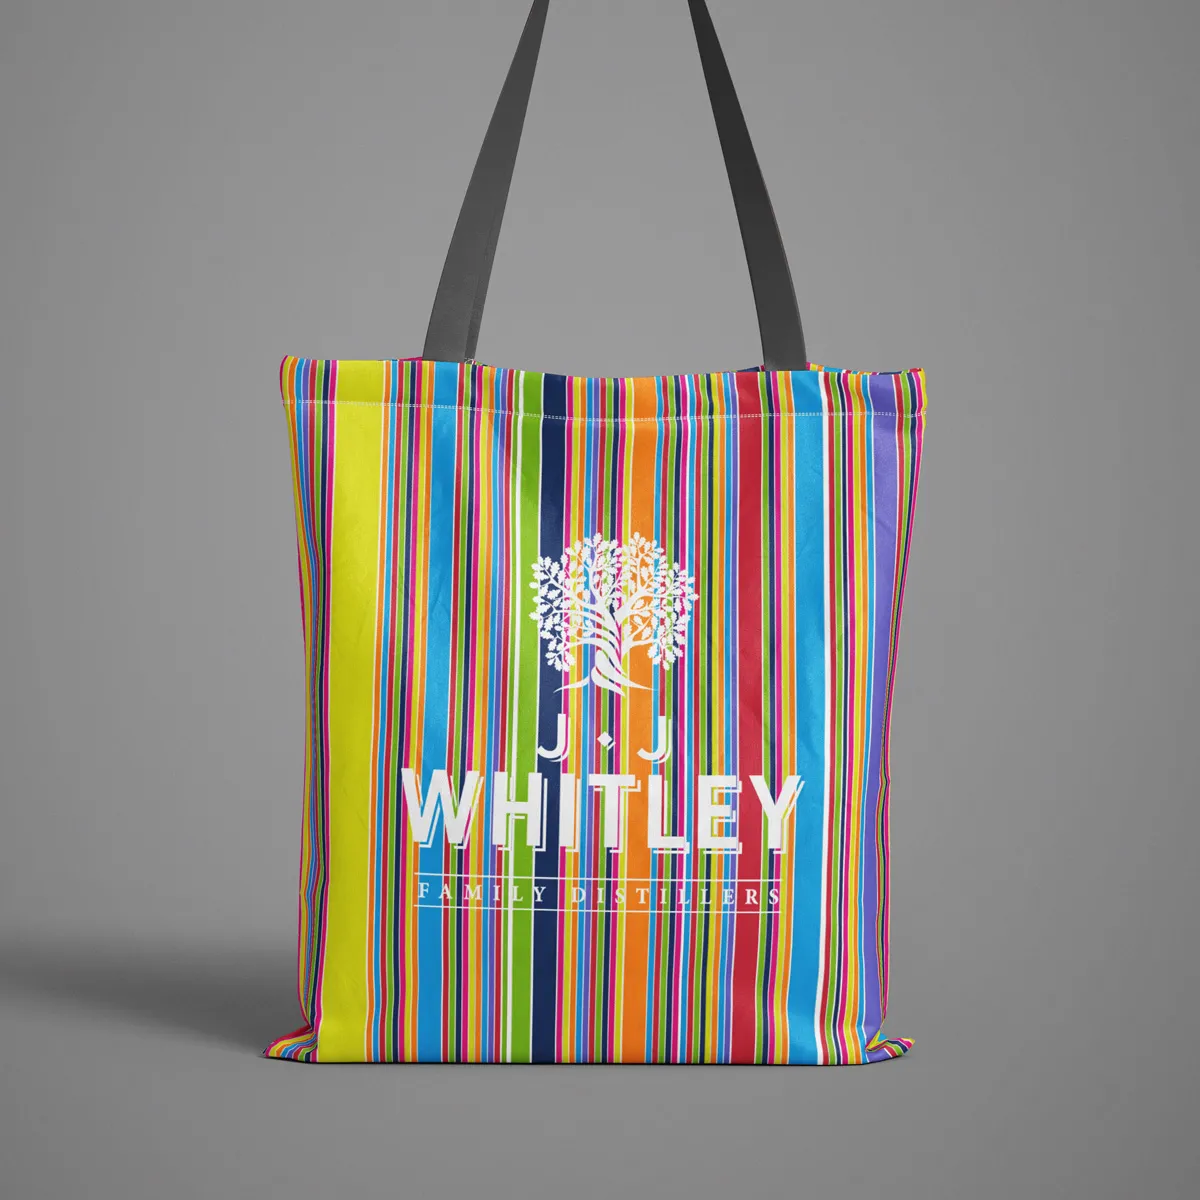 Printed tote bag design, Gin, Back bar POS, branded tote bag, Nonfacture Design Birmingham